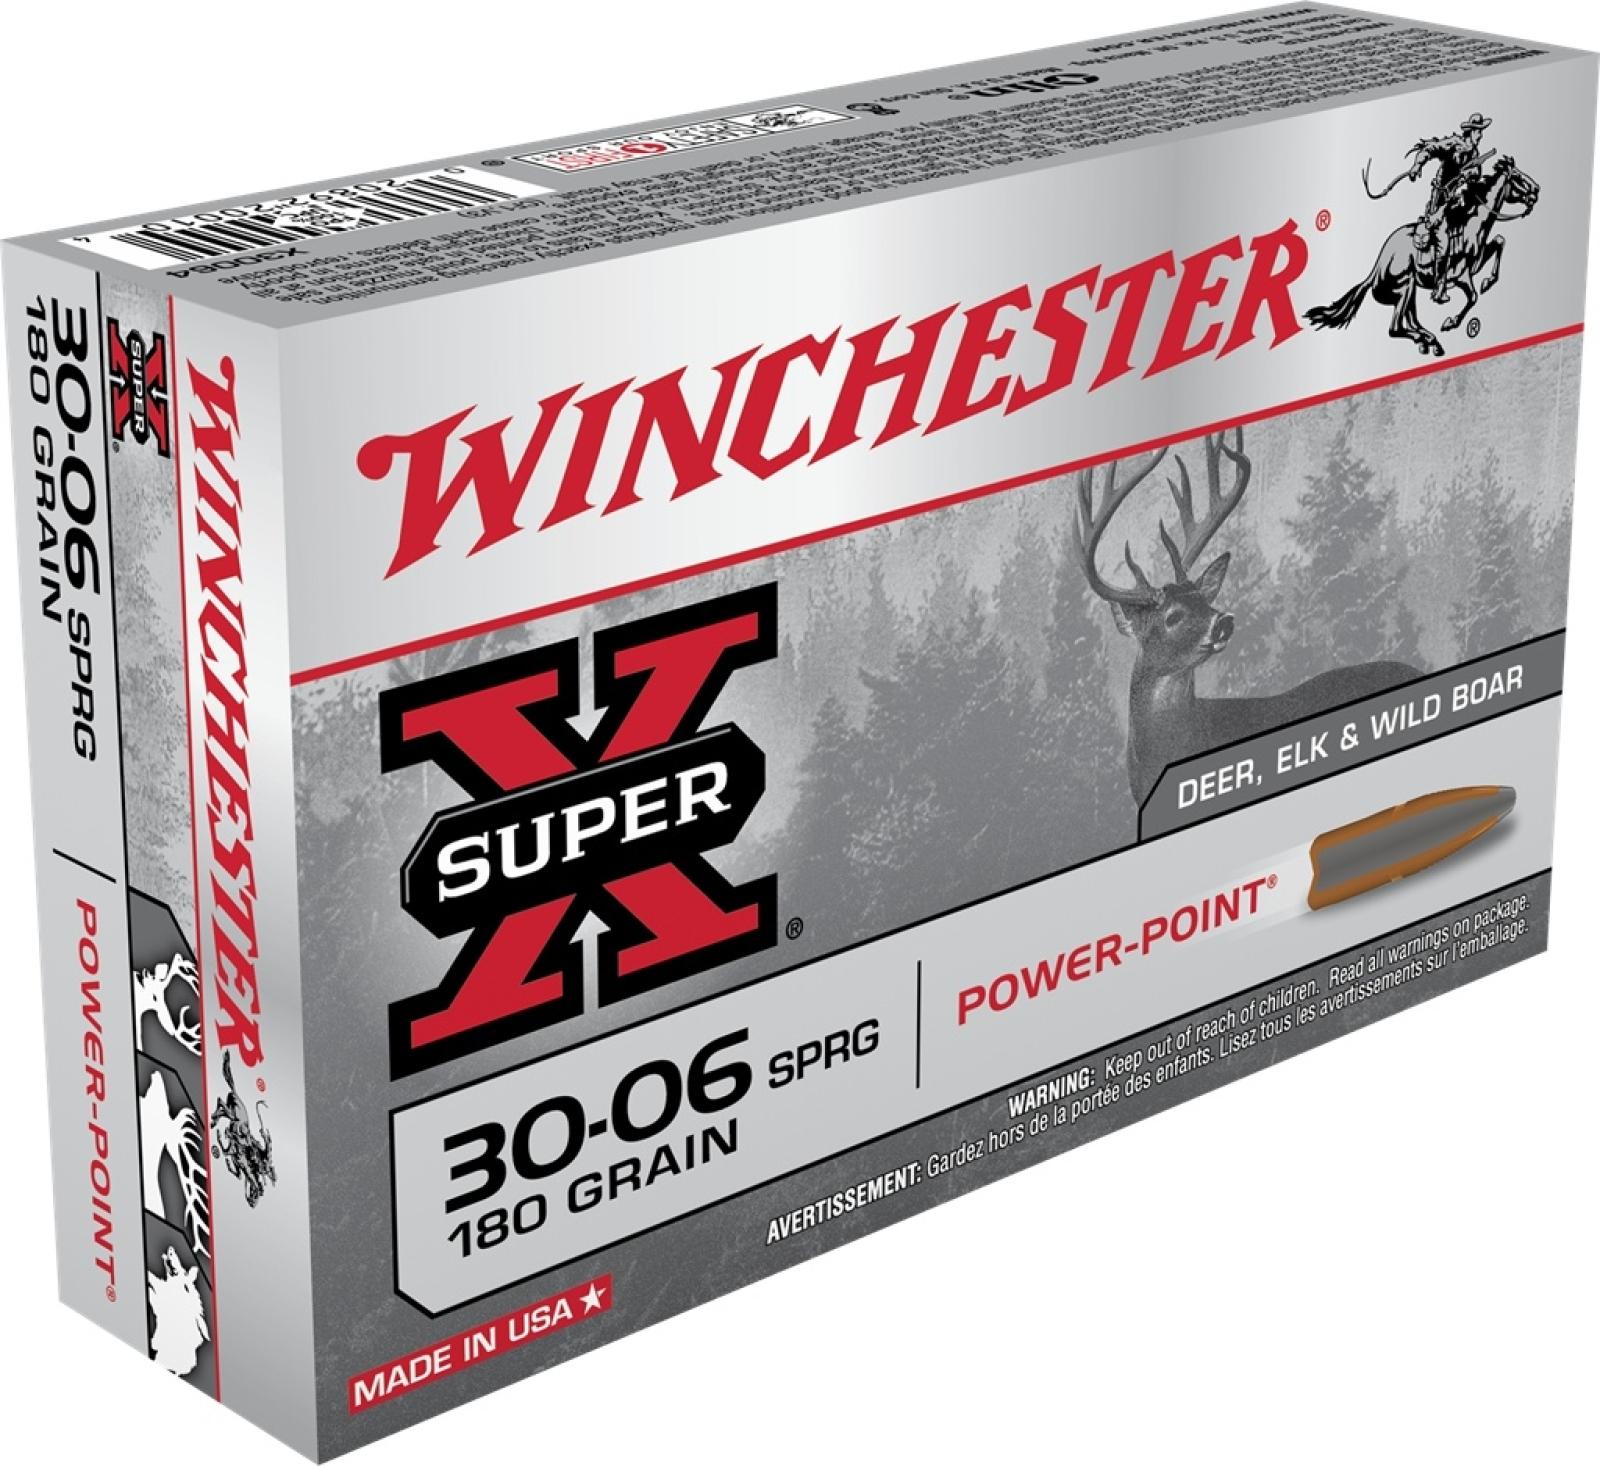 Winchester Super-X 30-06 Springfield 180 Grain Power-Point